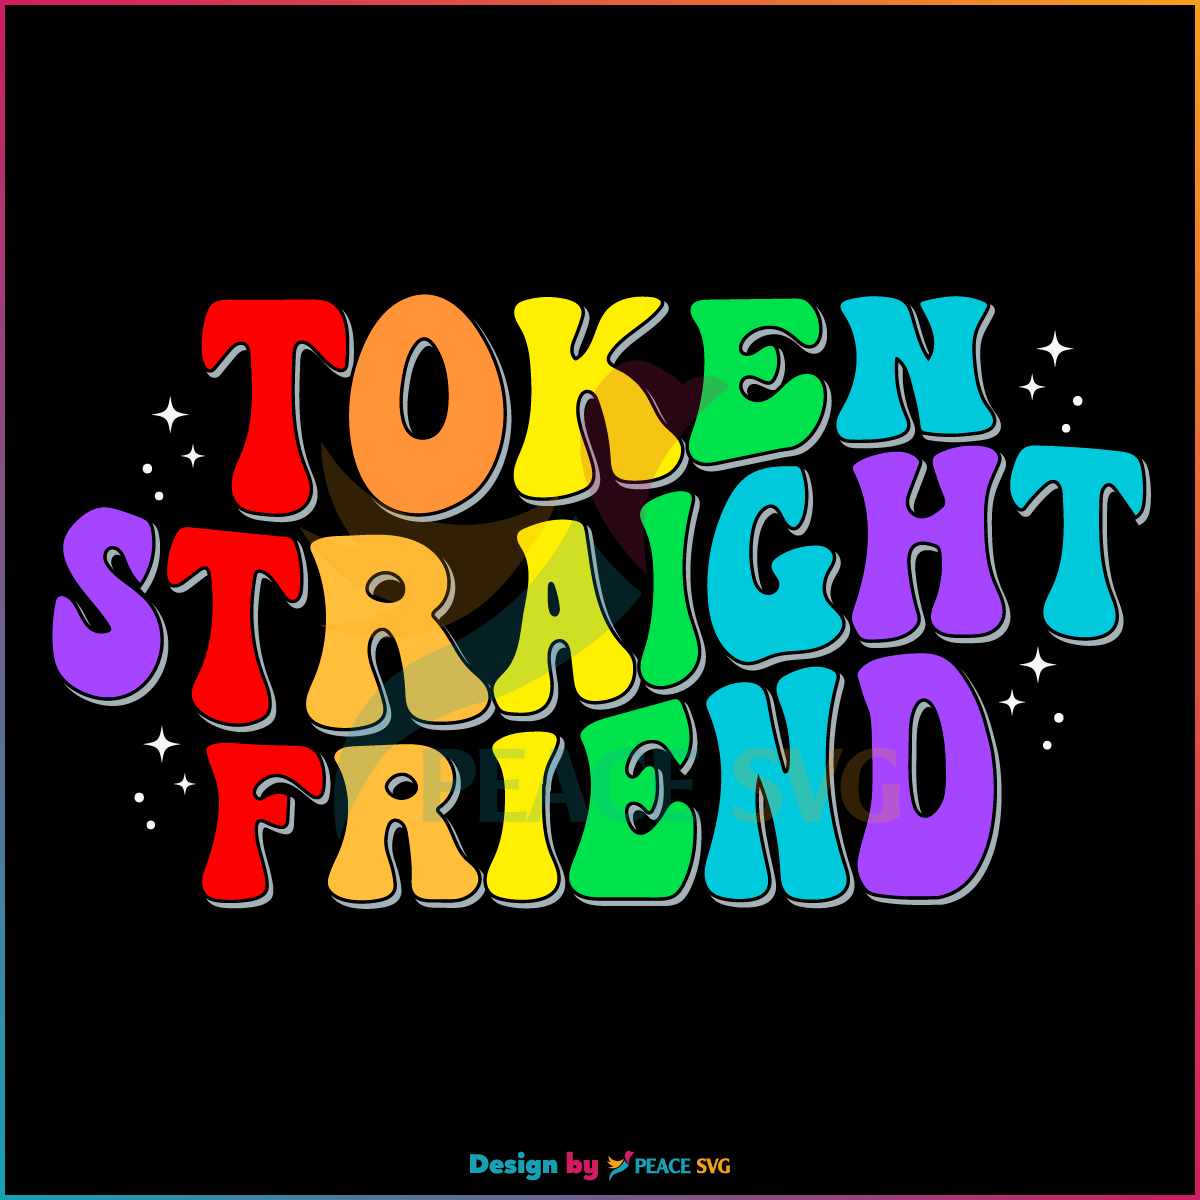 token-straight-friend-lgbt-pride-svg-graphic-design-files